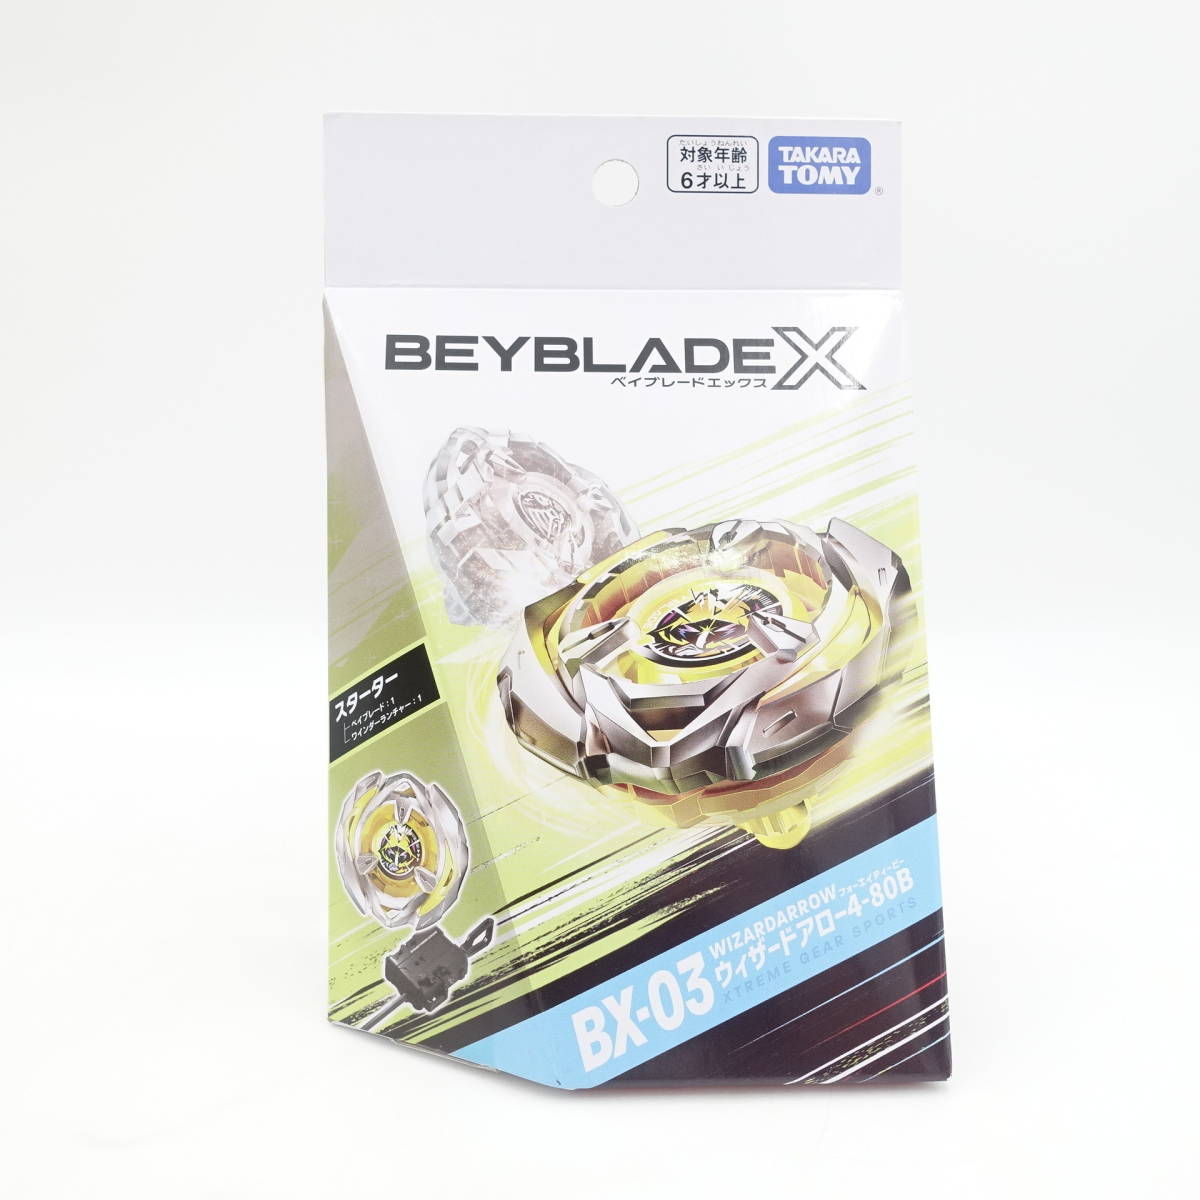 BEYBLADE X ベイブレードX BX-03 スターター ウィザードアロー 4-80B 未開封 タカラトミー TAKARA TOMY/12735_画像1